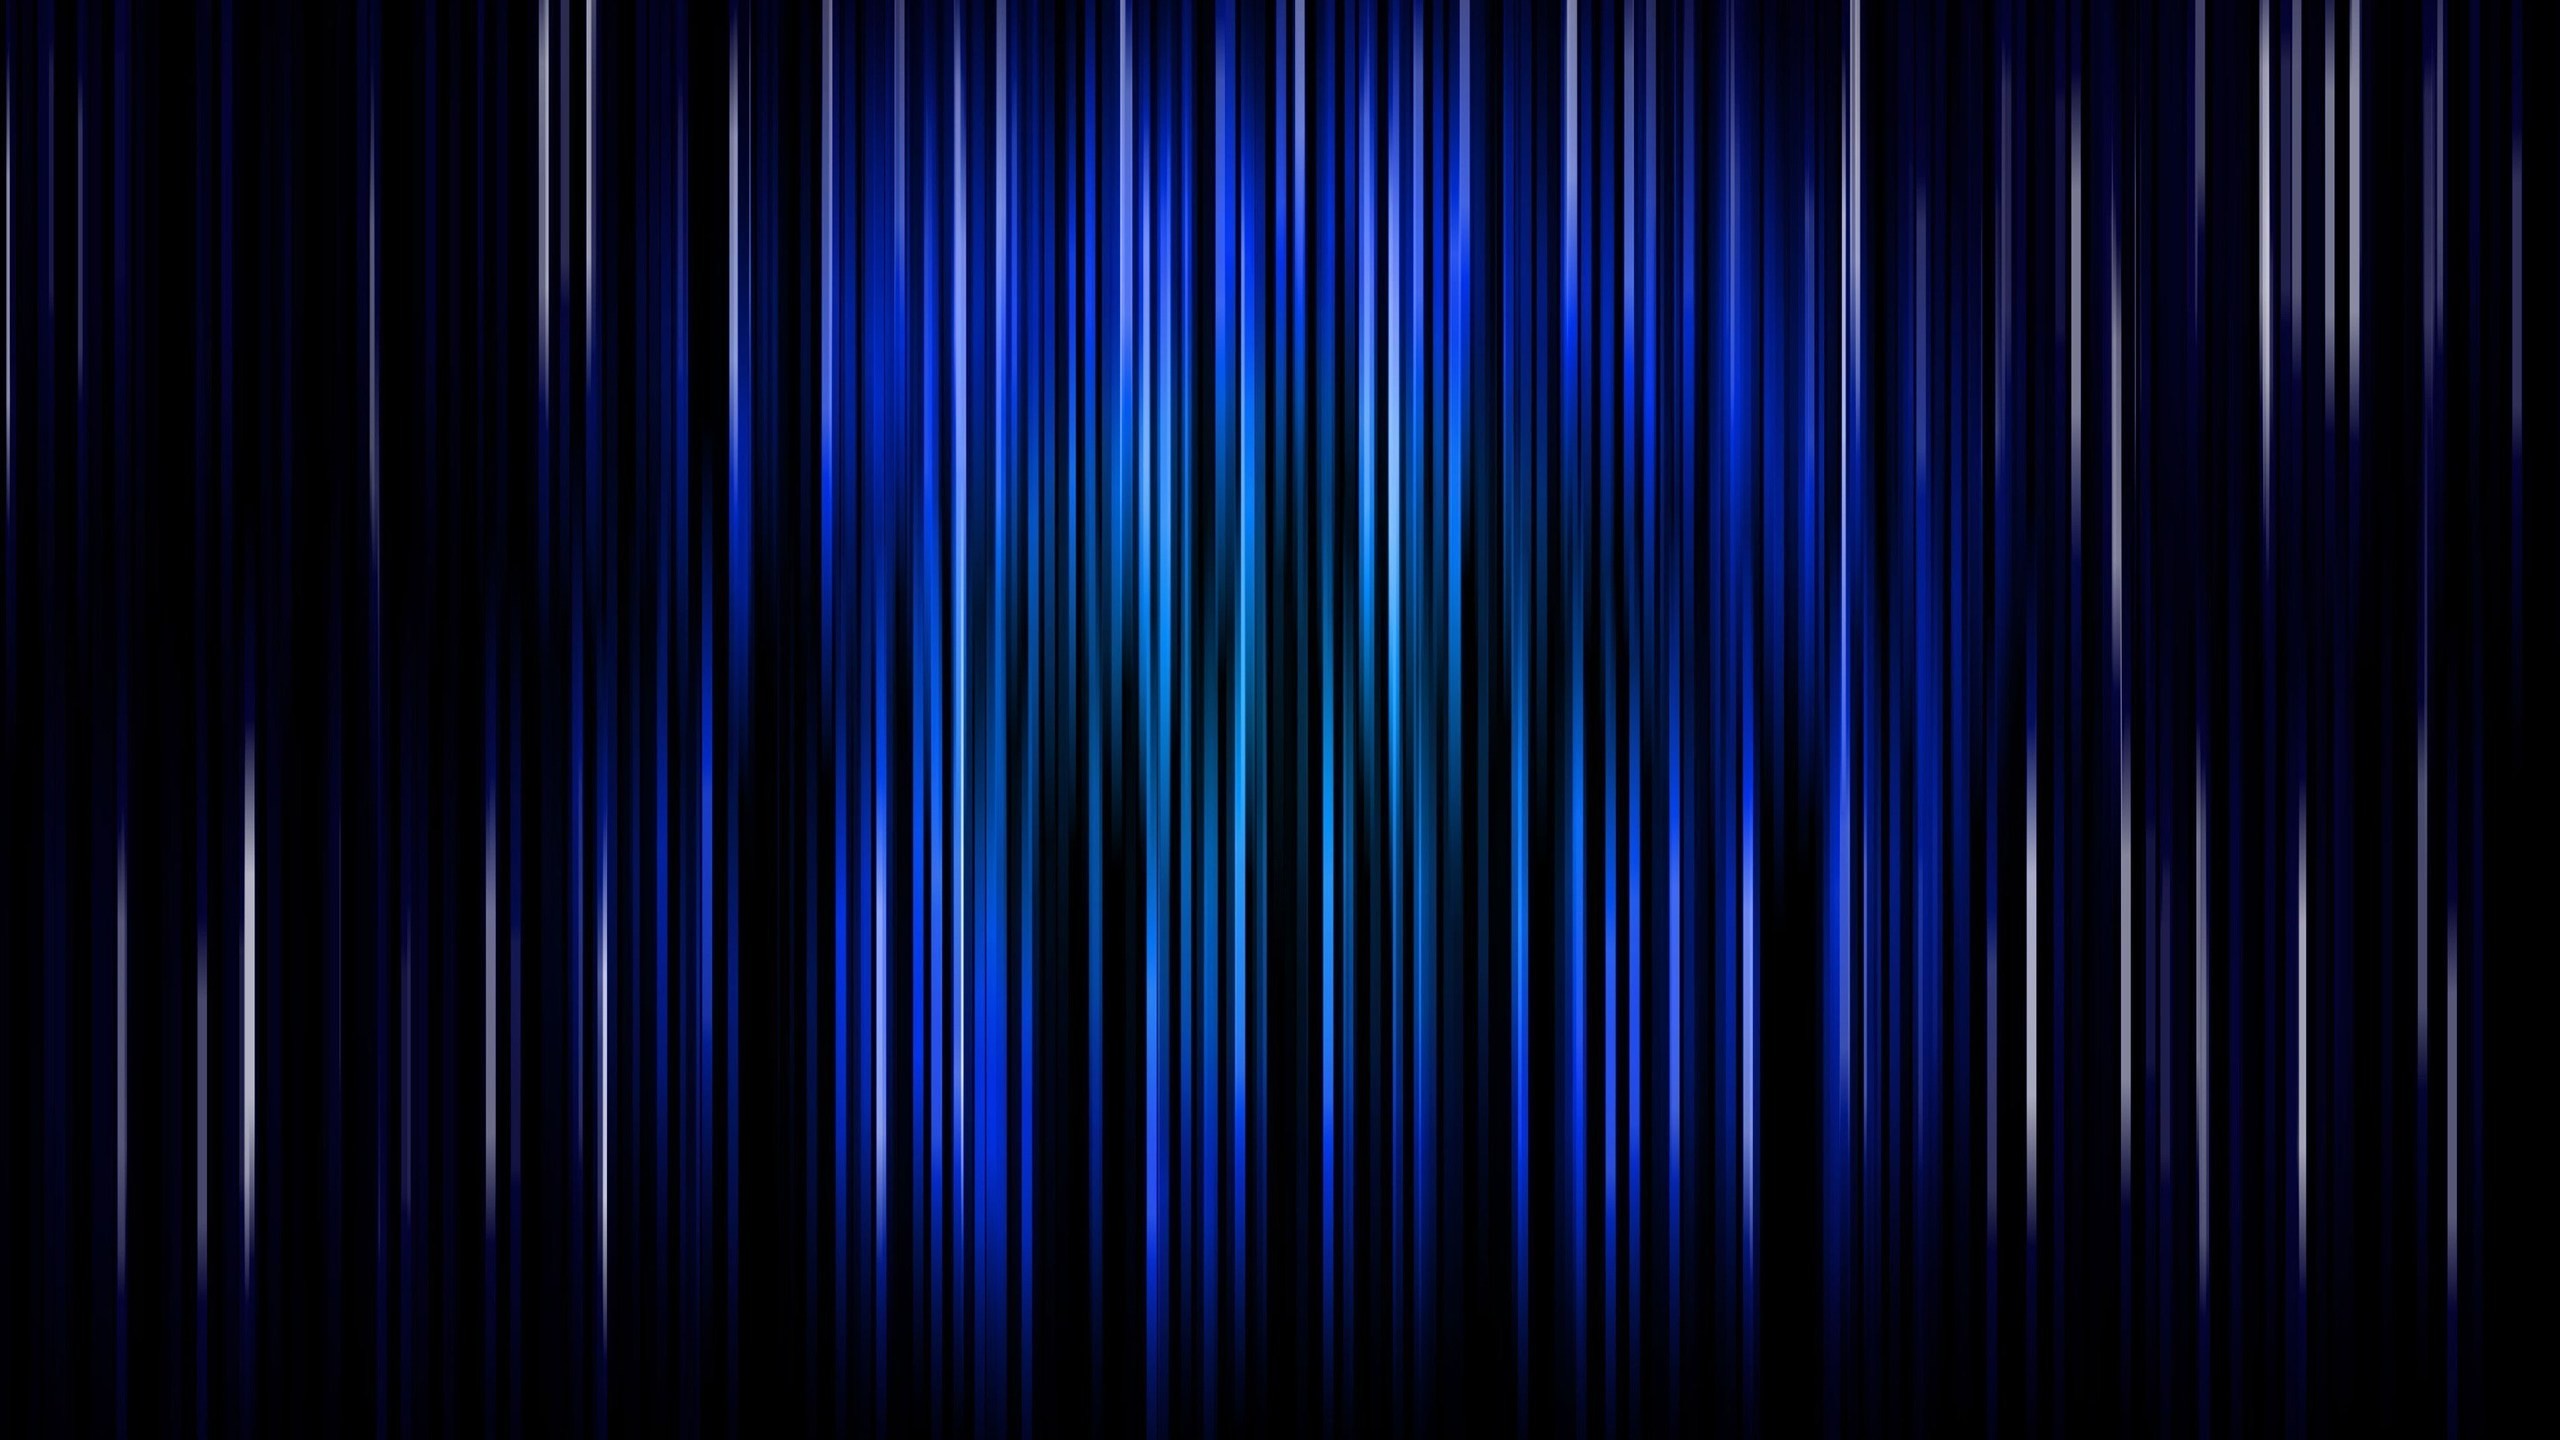 pixel art wallpaper,blau,schwarz,elektrisches blau,lila,kobaltblau